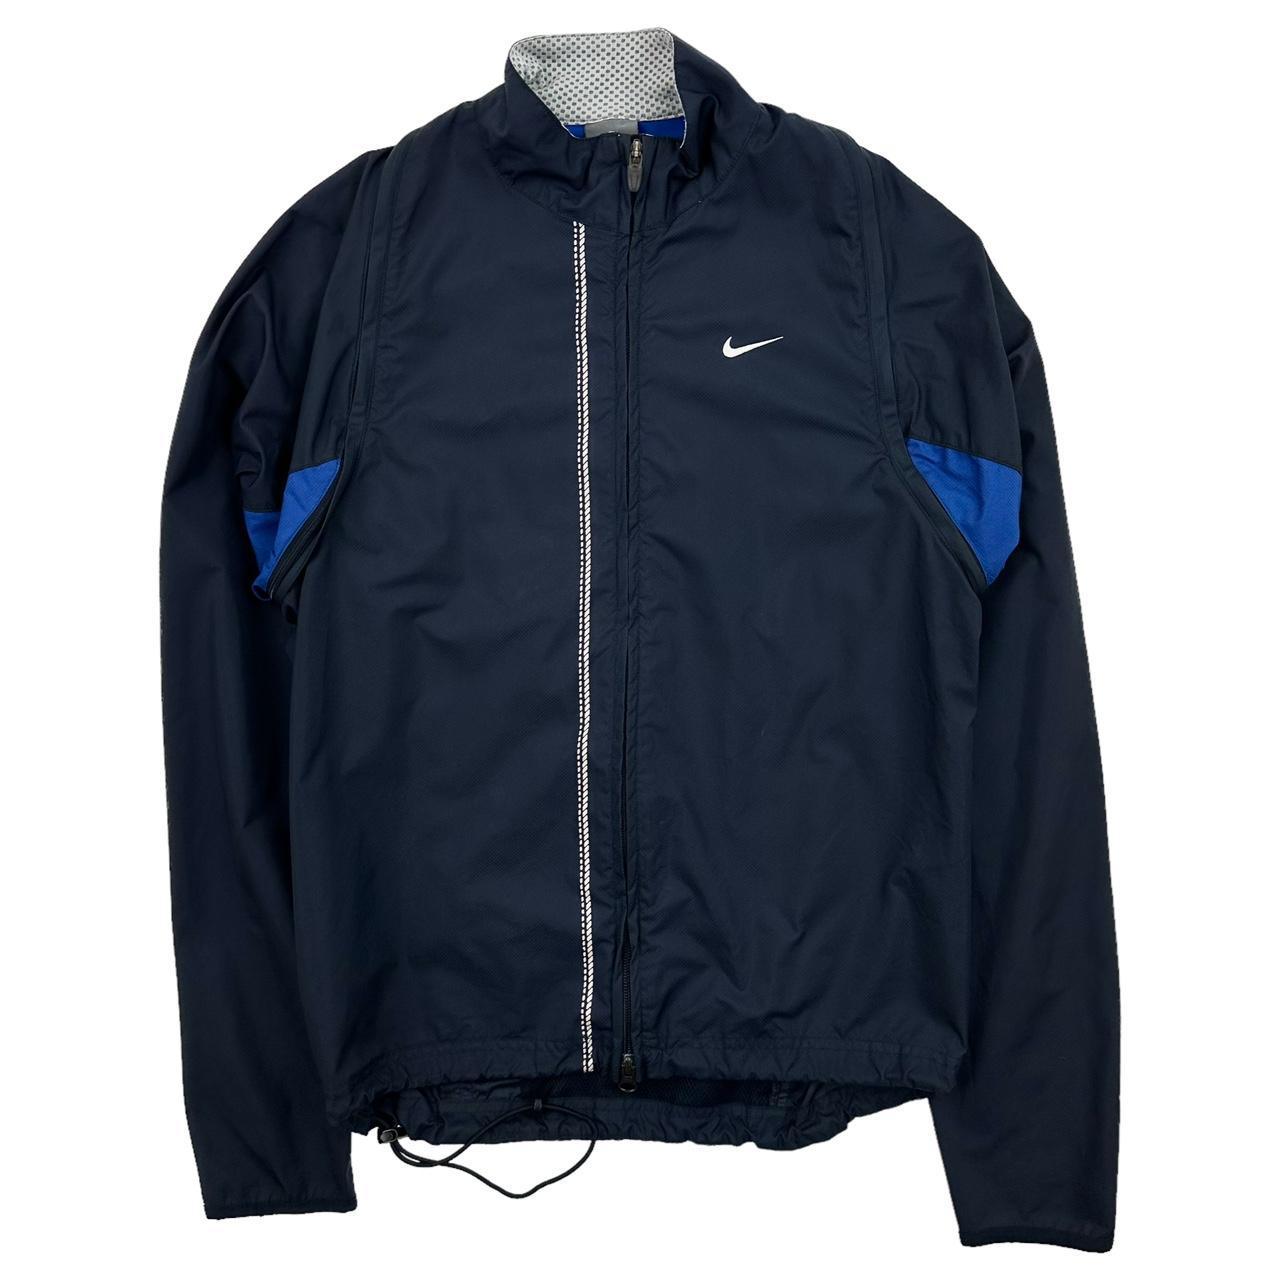 Vintage Nike Ventilation jacket size S - Known Source